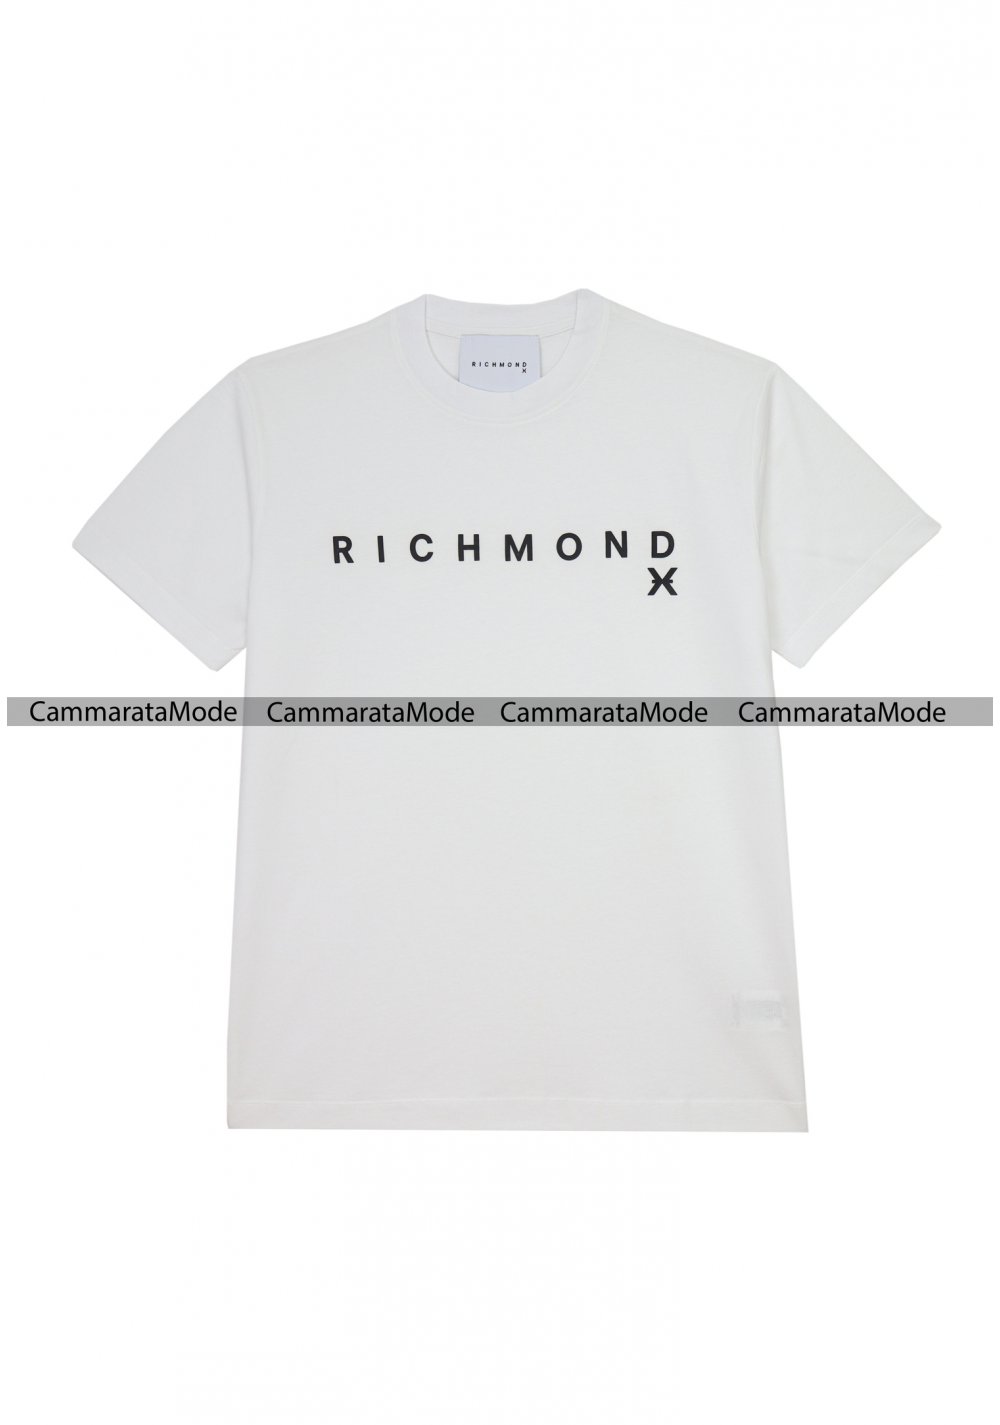 Richmond Tshirt bianca logo da uomo, cotone a girocollo